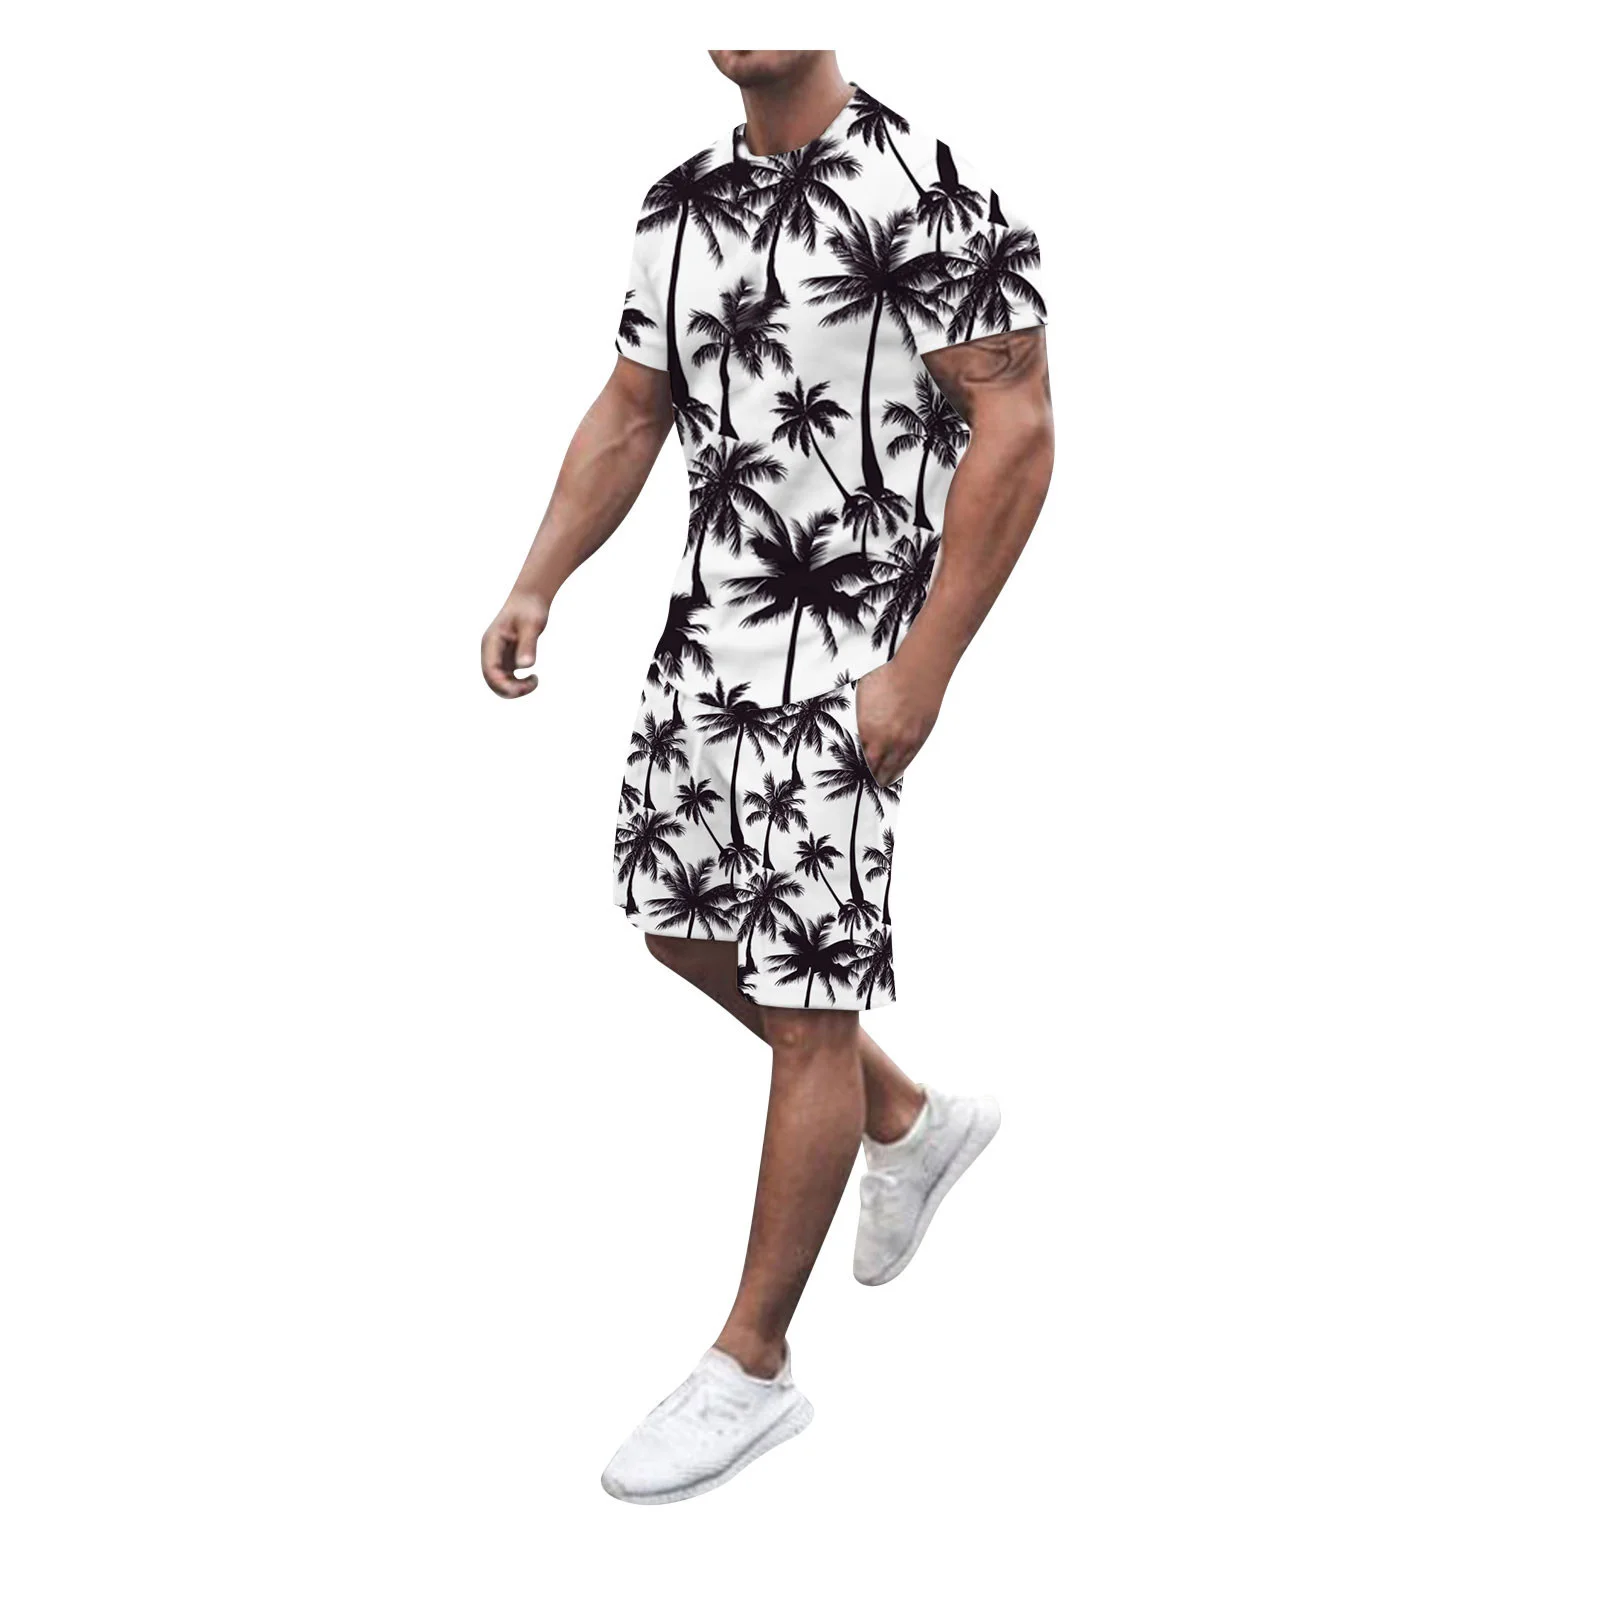 mens jogger sets New Summer Fashion Men's 2 Piece Set Tracksuits Casual Short Sleeves Print T-shirt+shorts Pants Suits Camisetas Ropa Hombre designer jogging suits